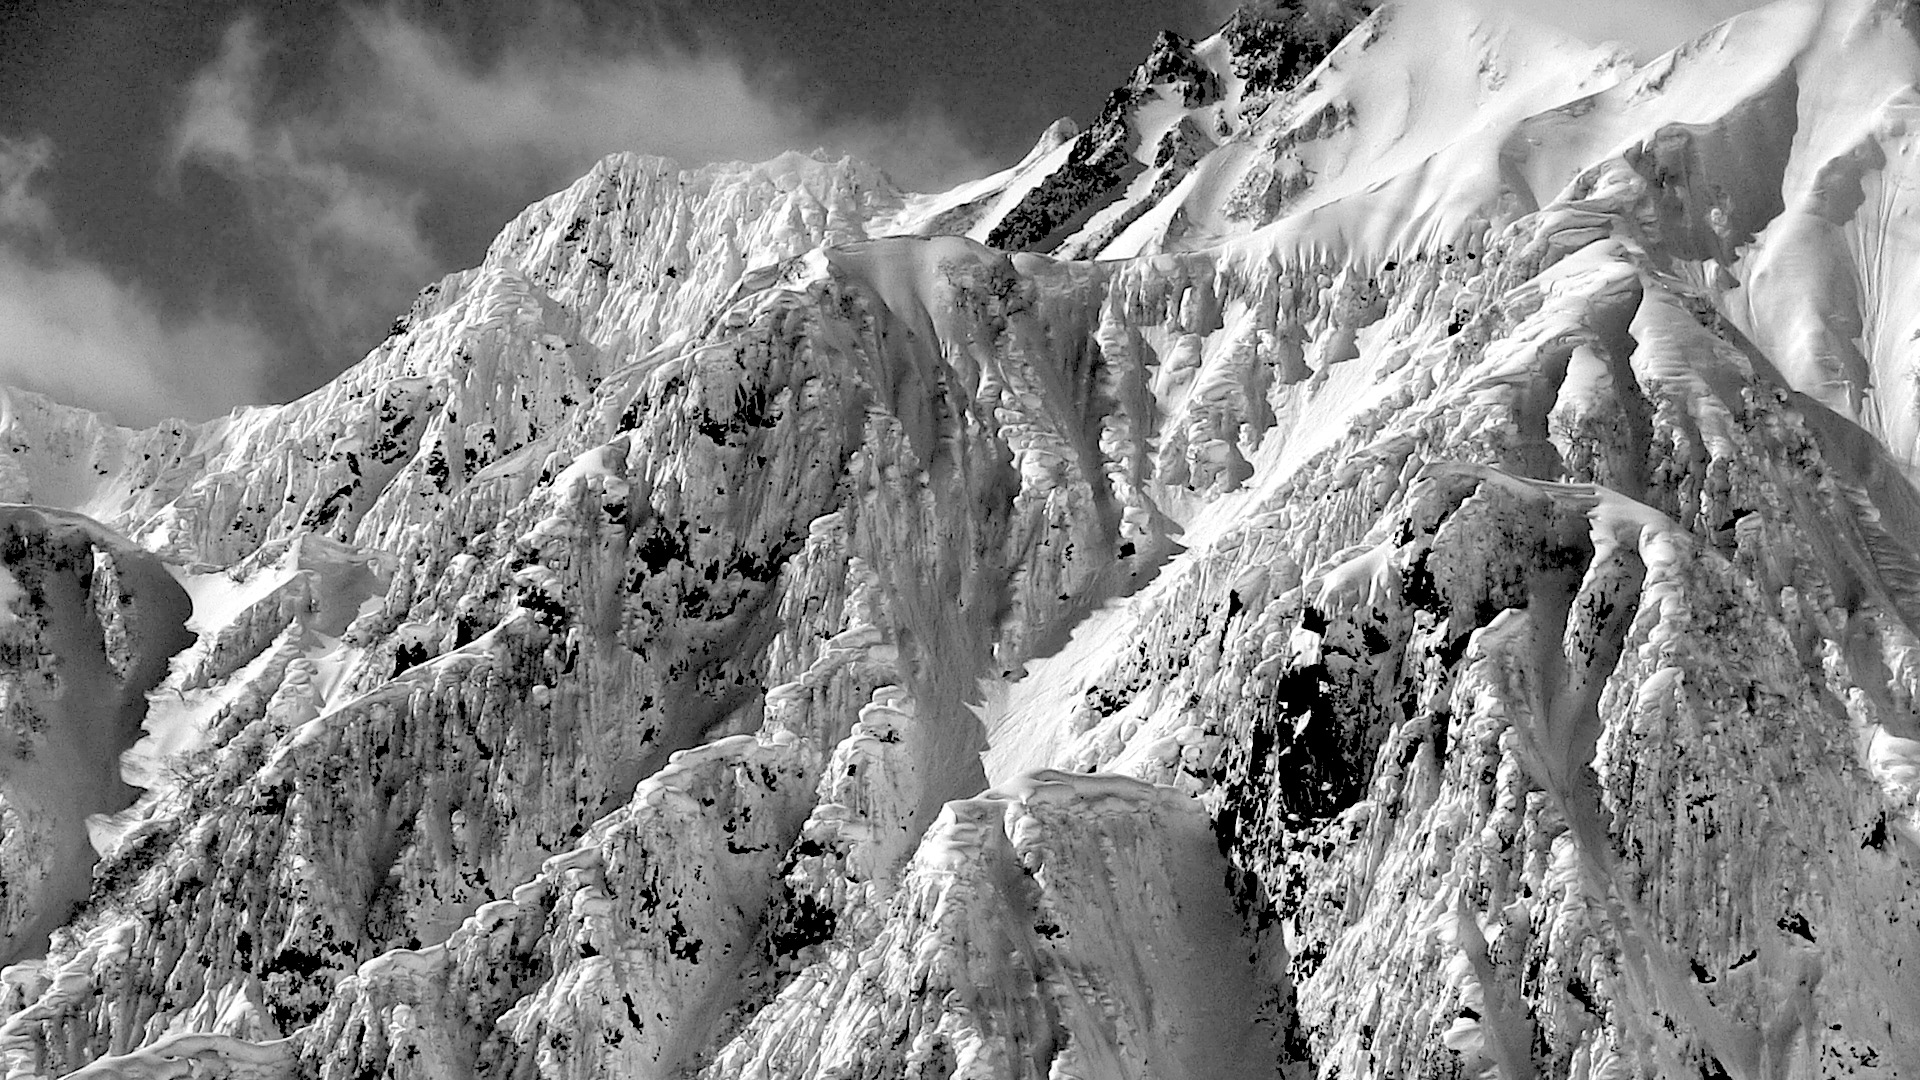 Japanese Alps, Japan. photo: miles clark/snowbrains